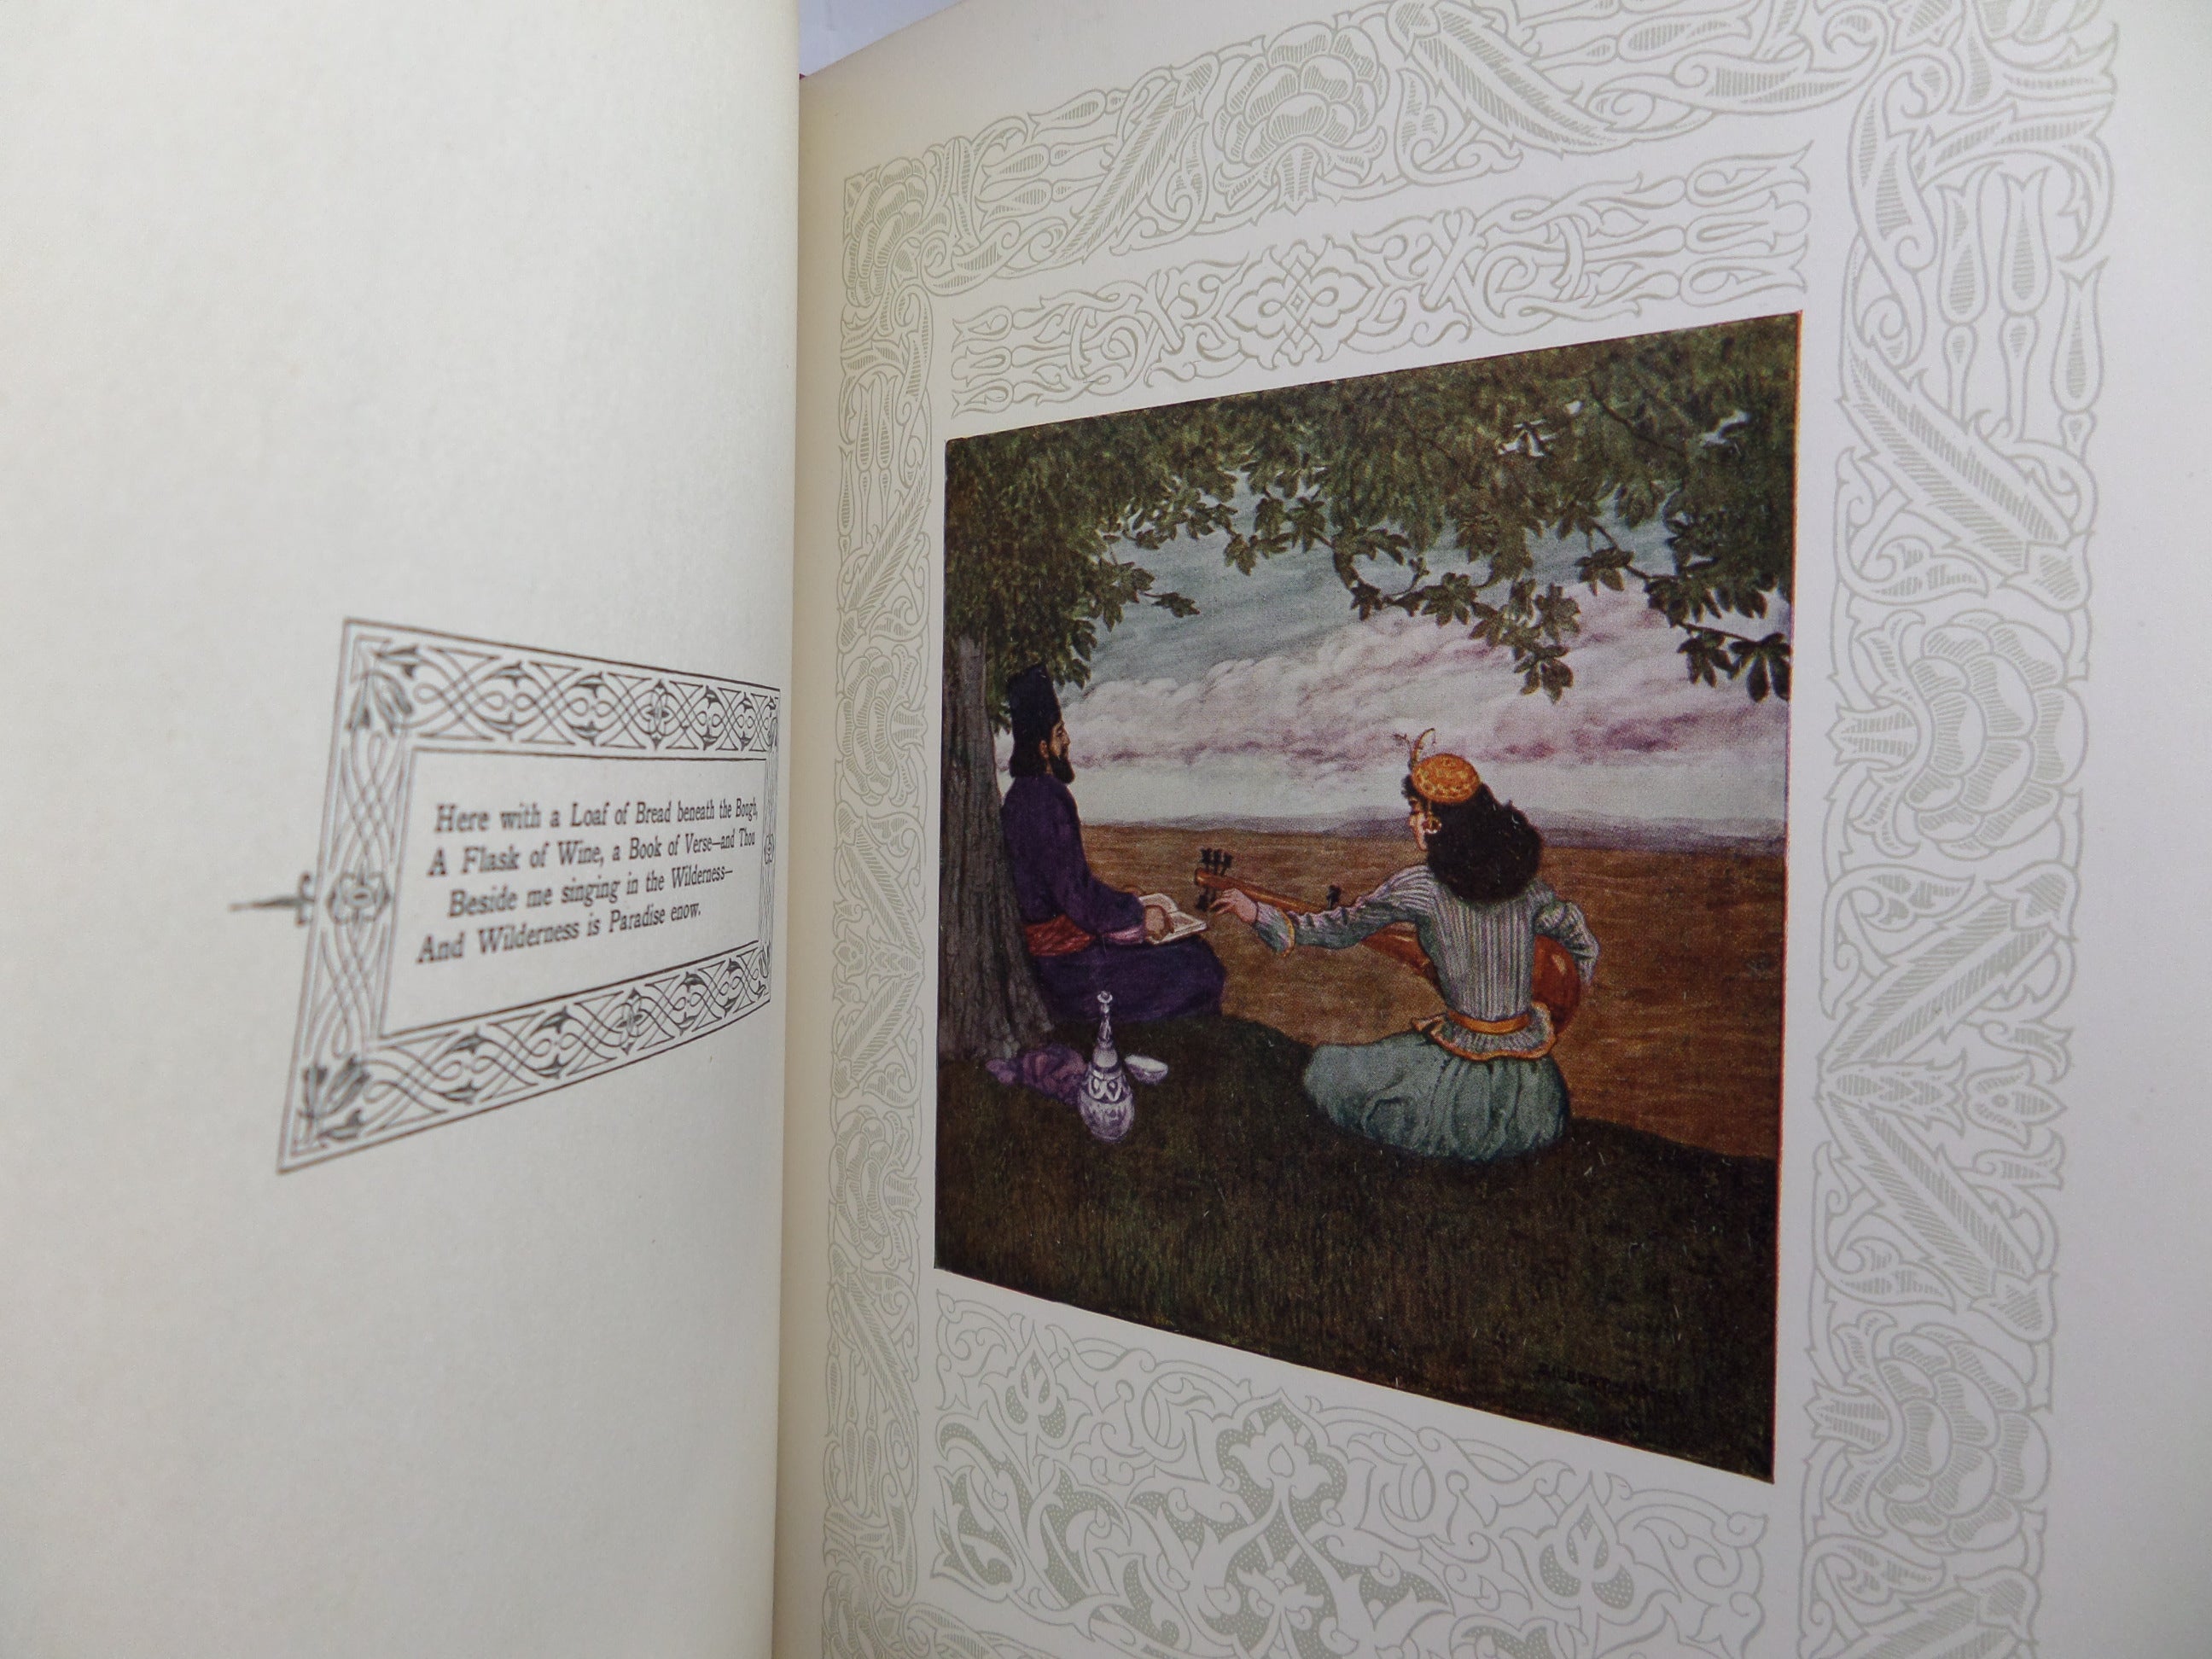 THE RUBAIYAT OF OMAR KHAYYAM 1909 FINE MOROCCO BINDING BY HENRY SOTHERAN